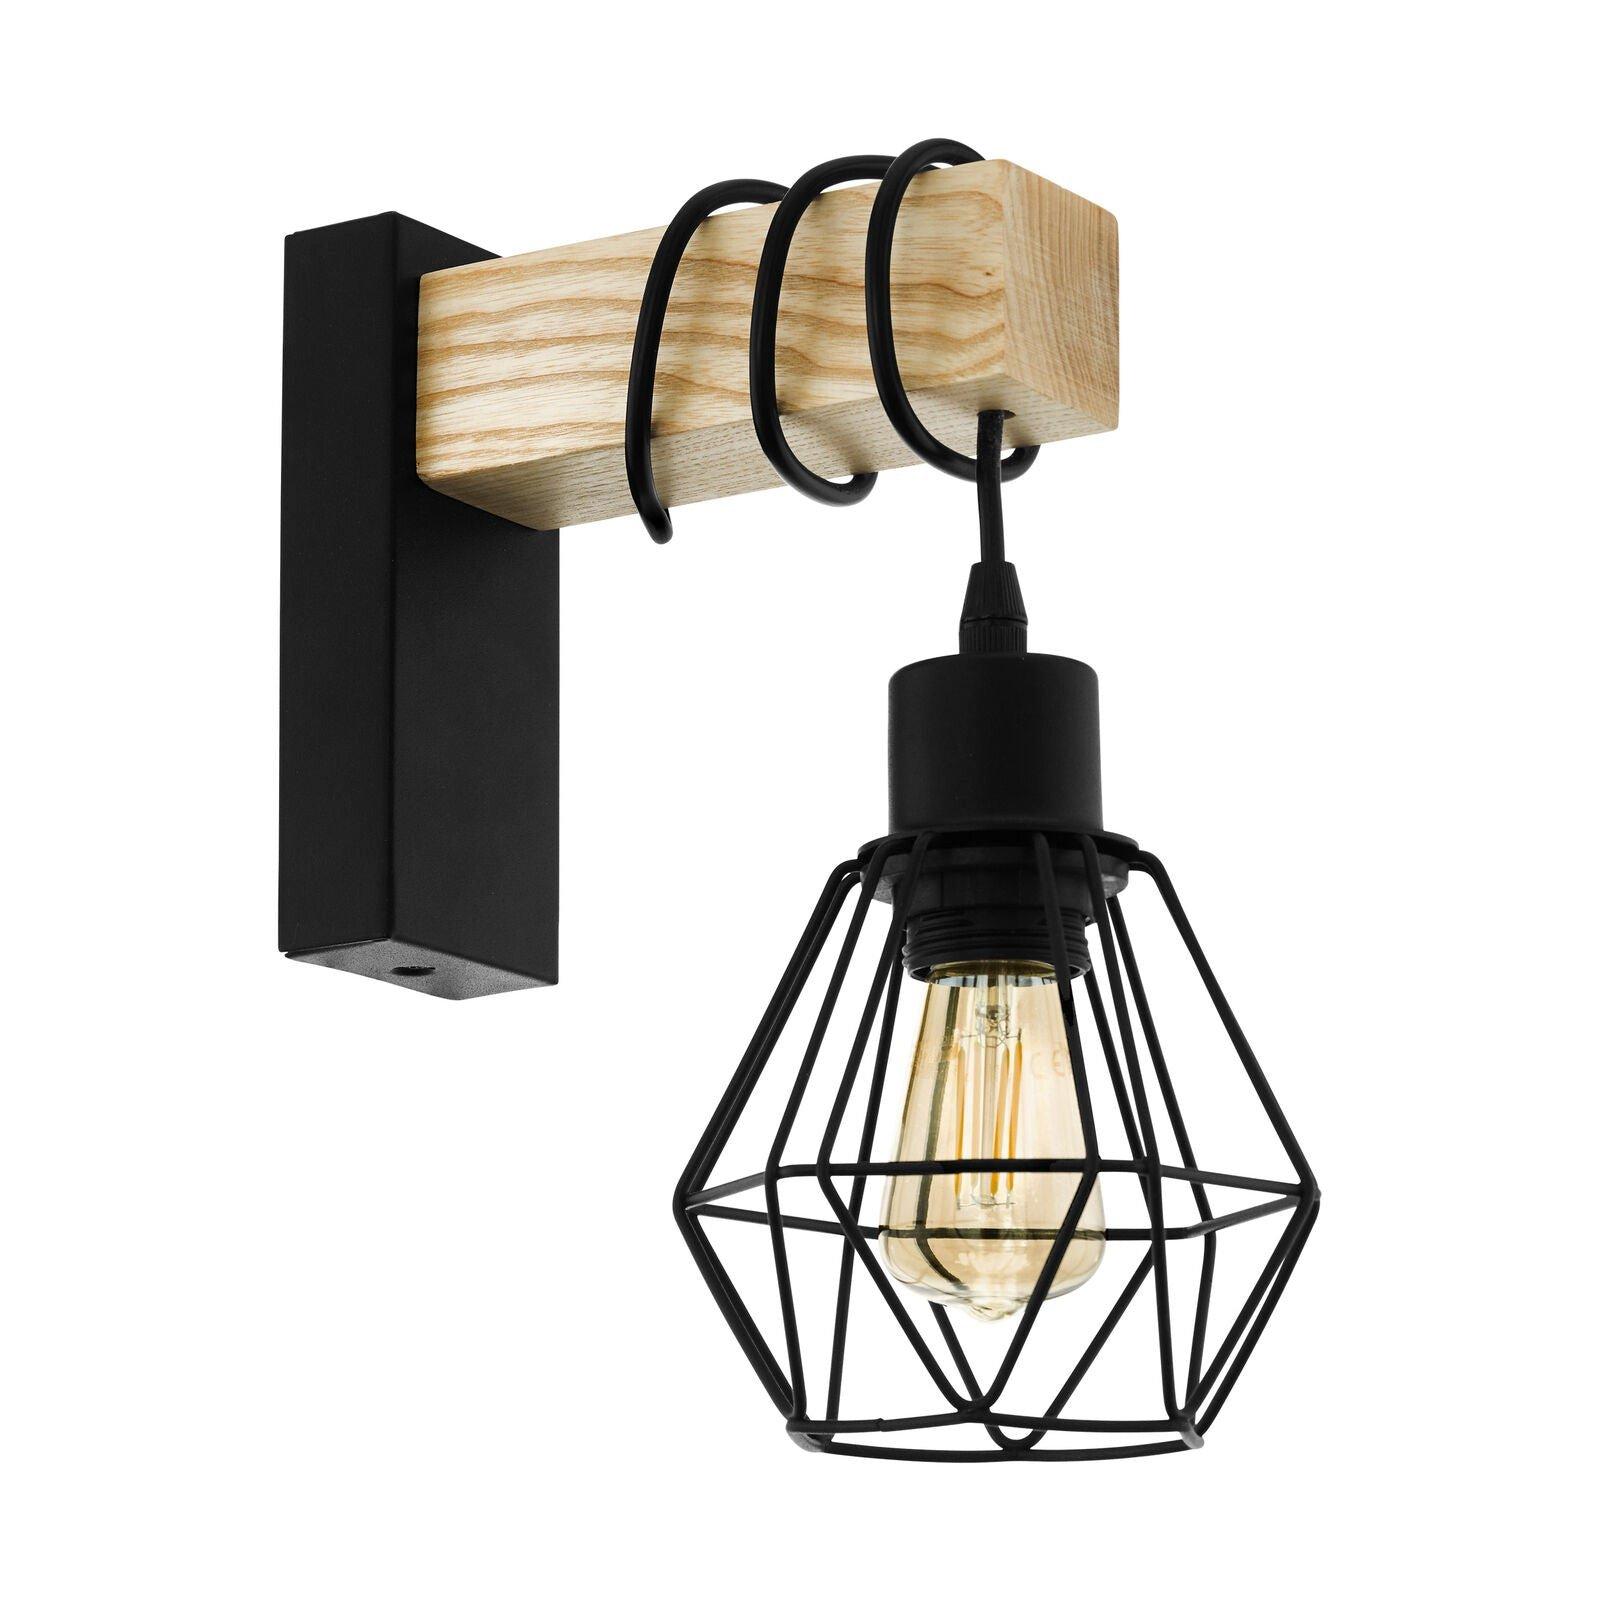 LED Wall Light / Sconce Black Plate & Wood Hangman Cage 1 x 10W E27 Bulb